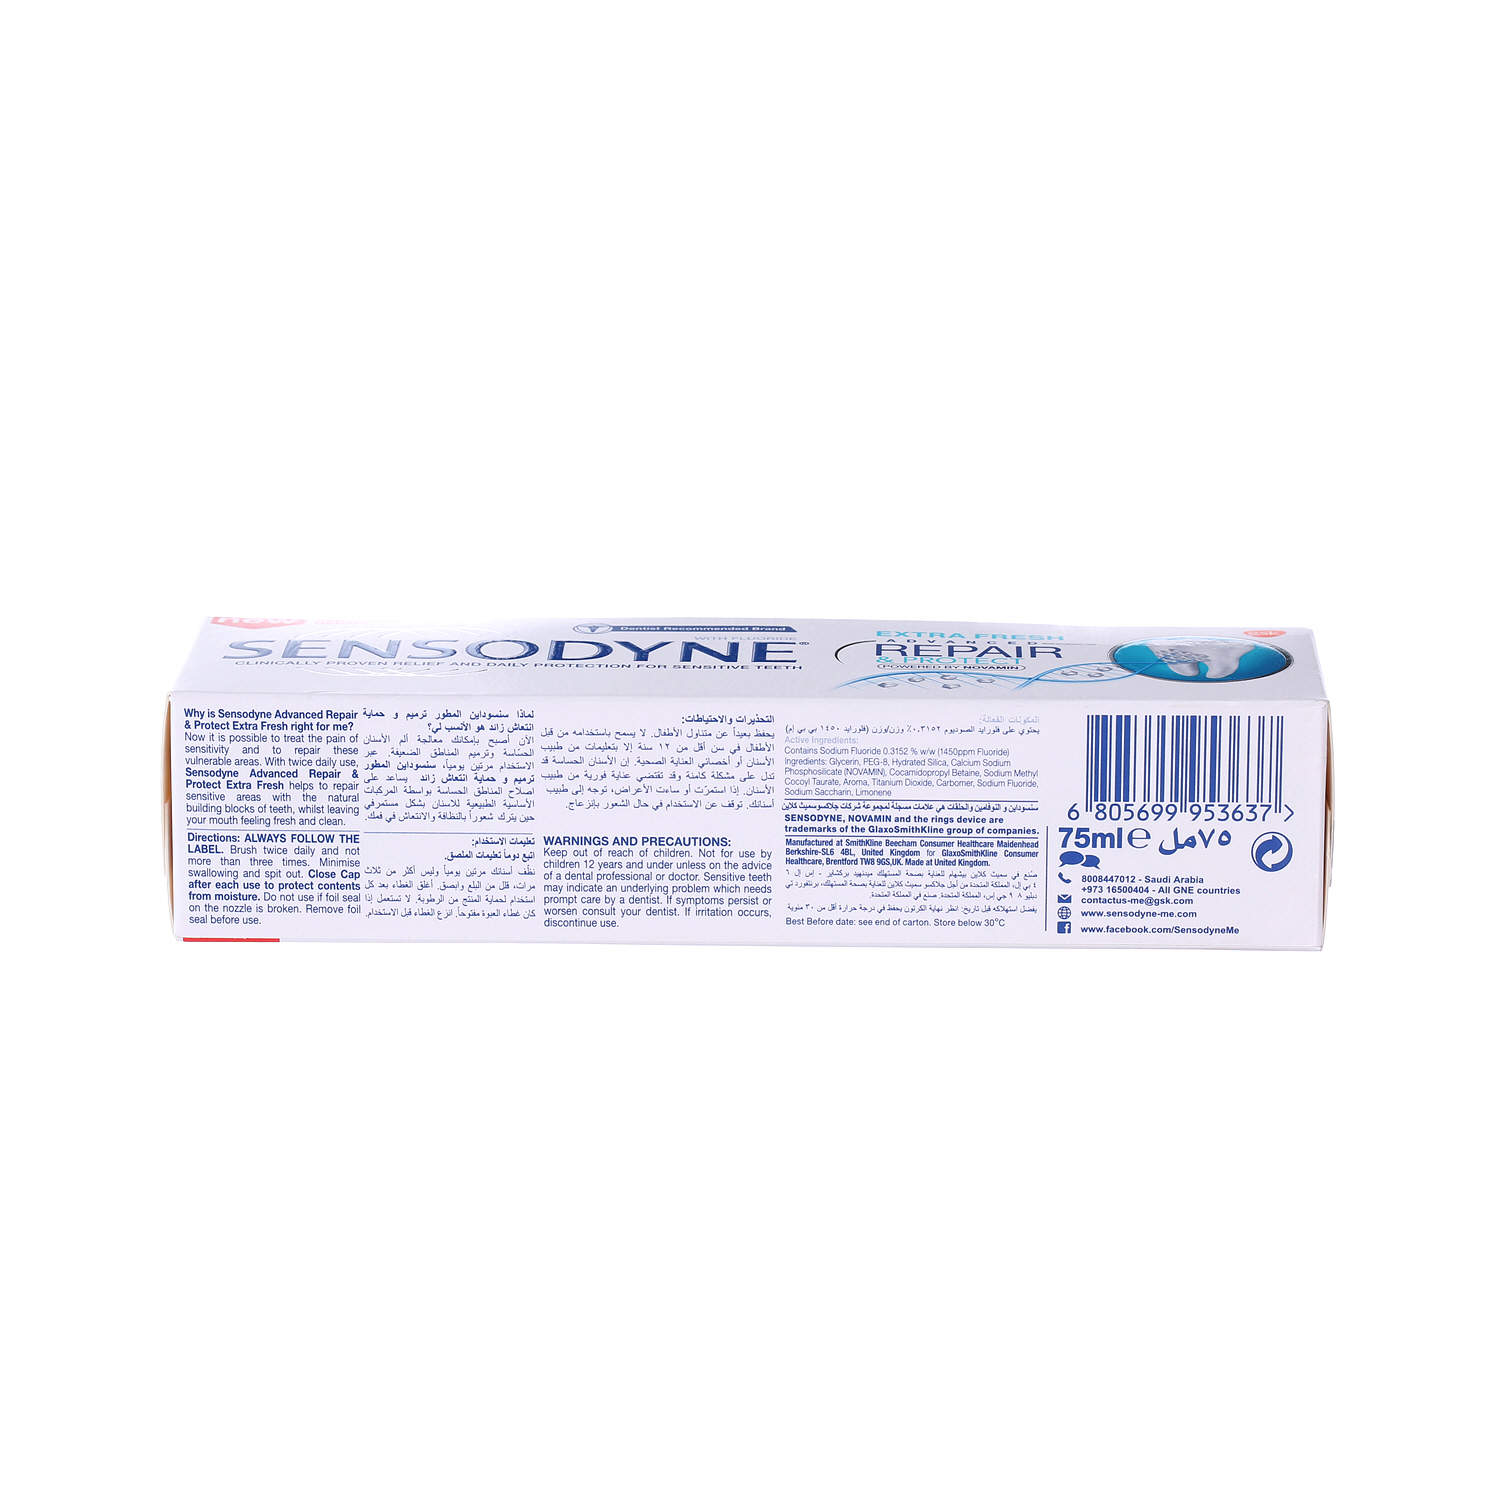 Sensodyne Toothpaste Repair & Protect Extra Fresh 75 ml